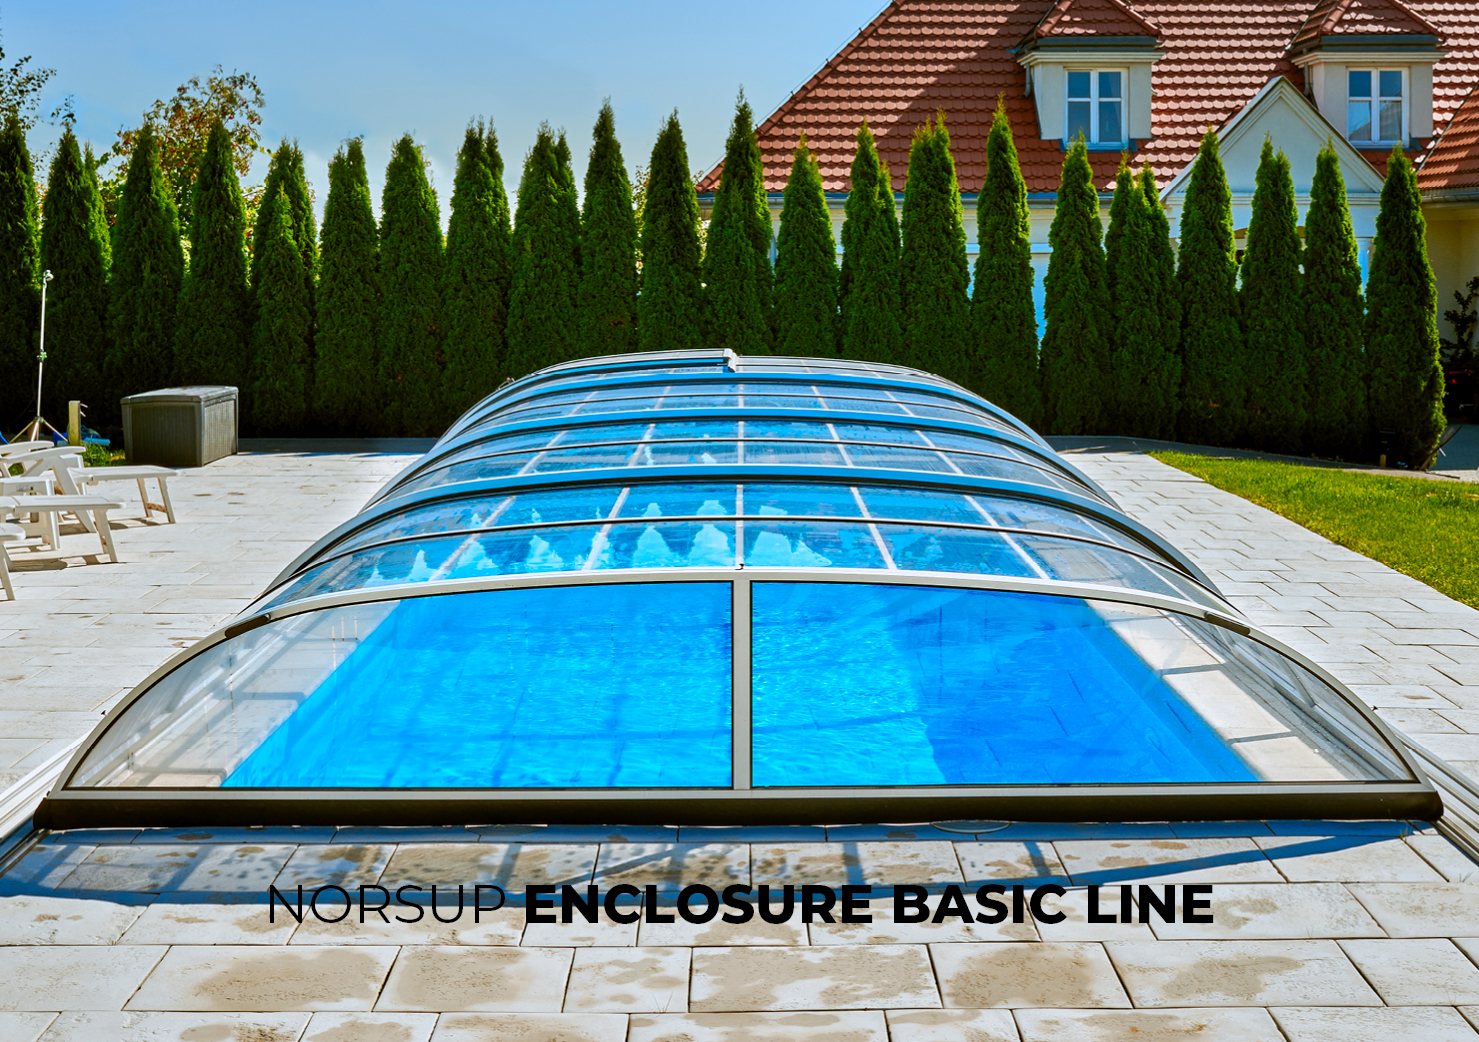 Norsup enclosure Basic line